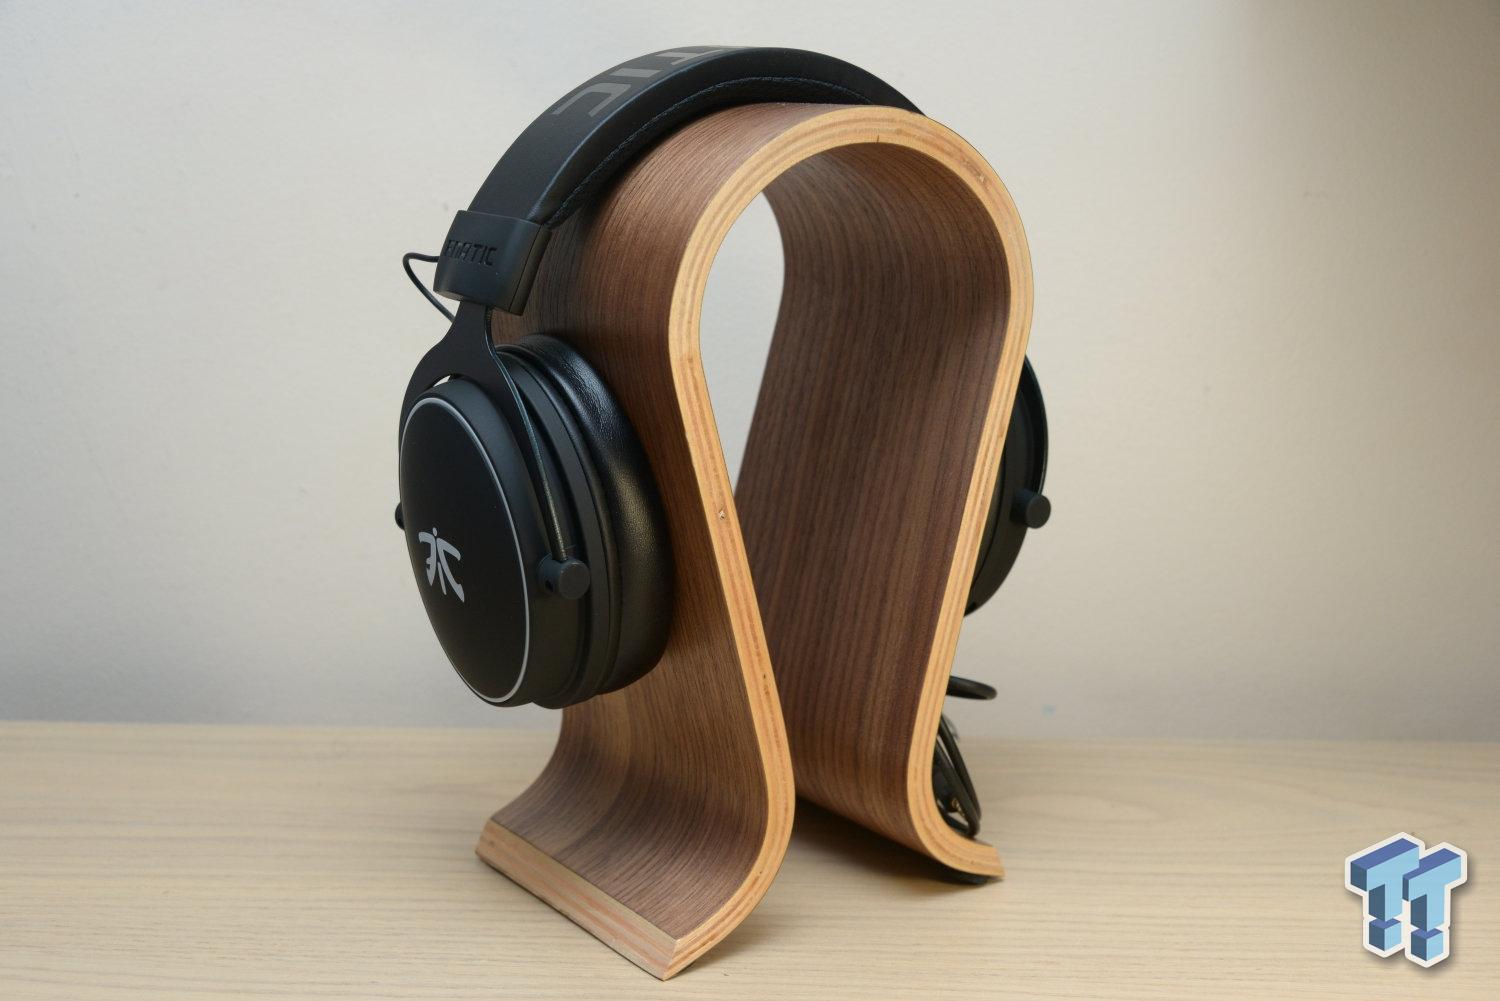 Fnatic react gaming headphone, Audio, Headphones & Headsets on Carousell